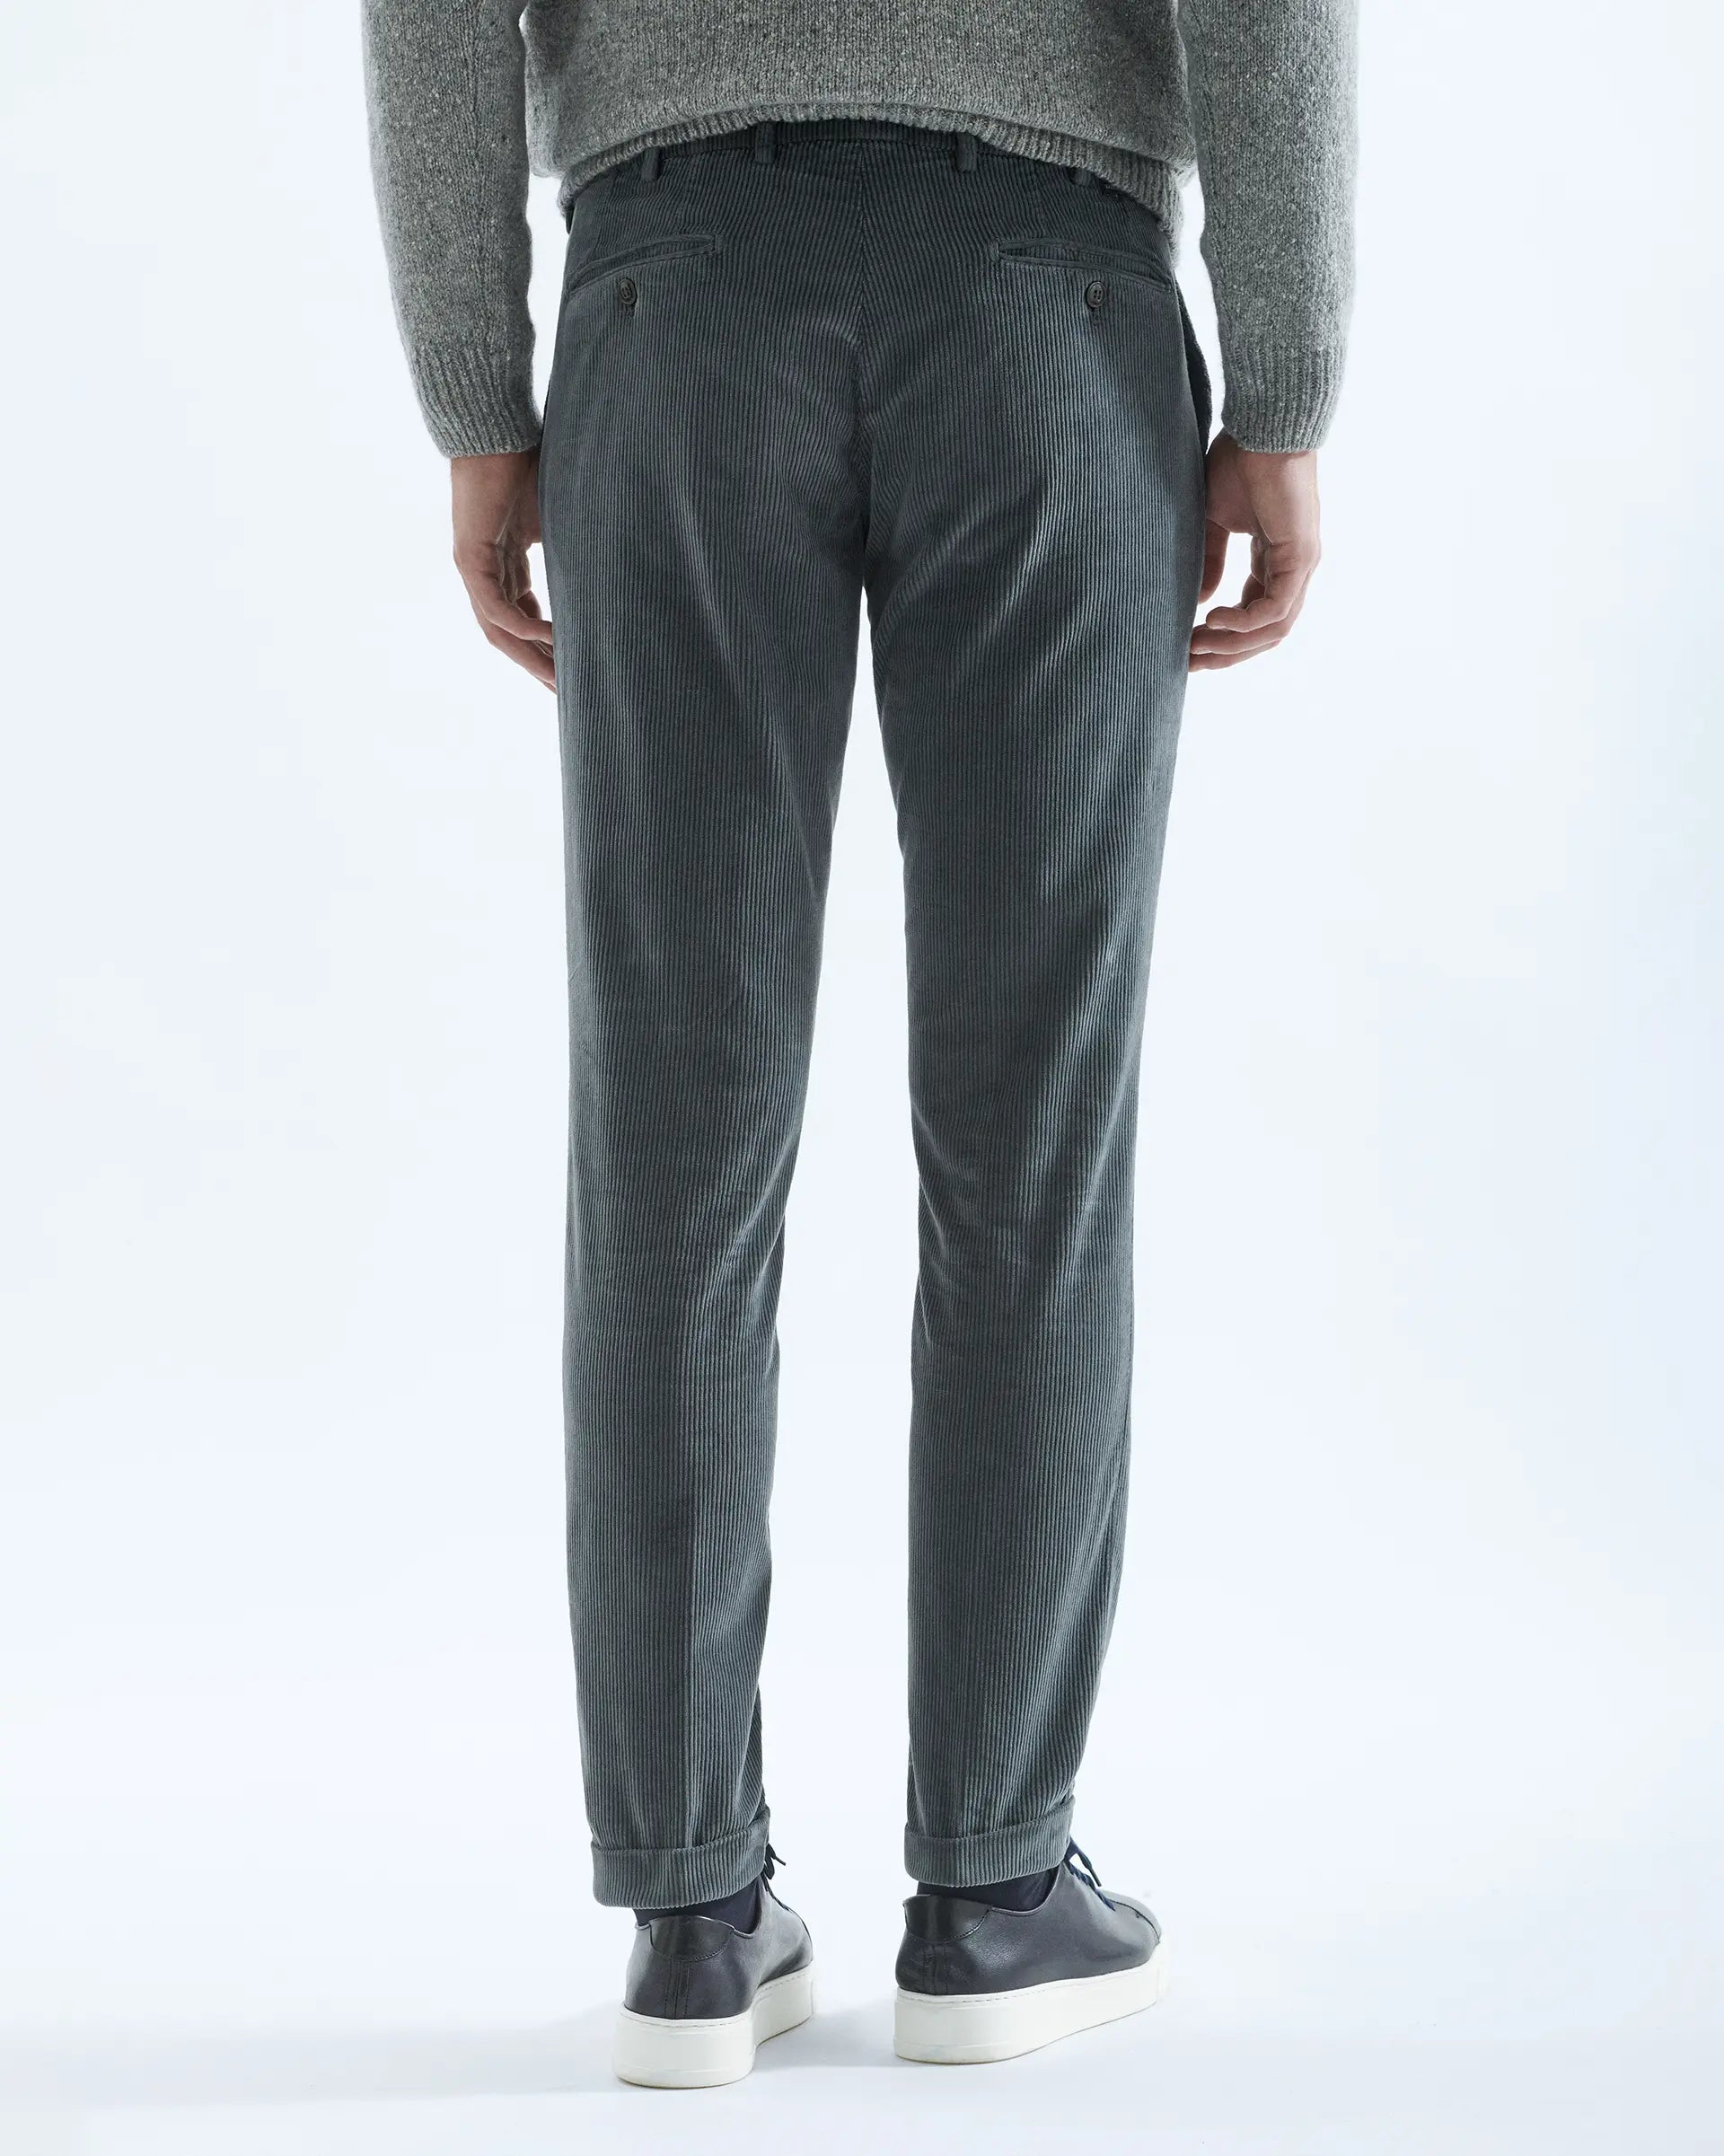 Charcoal Grey  Cotton Stretch pants